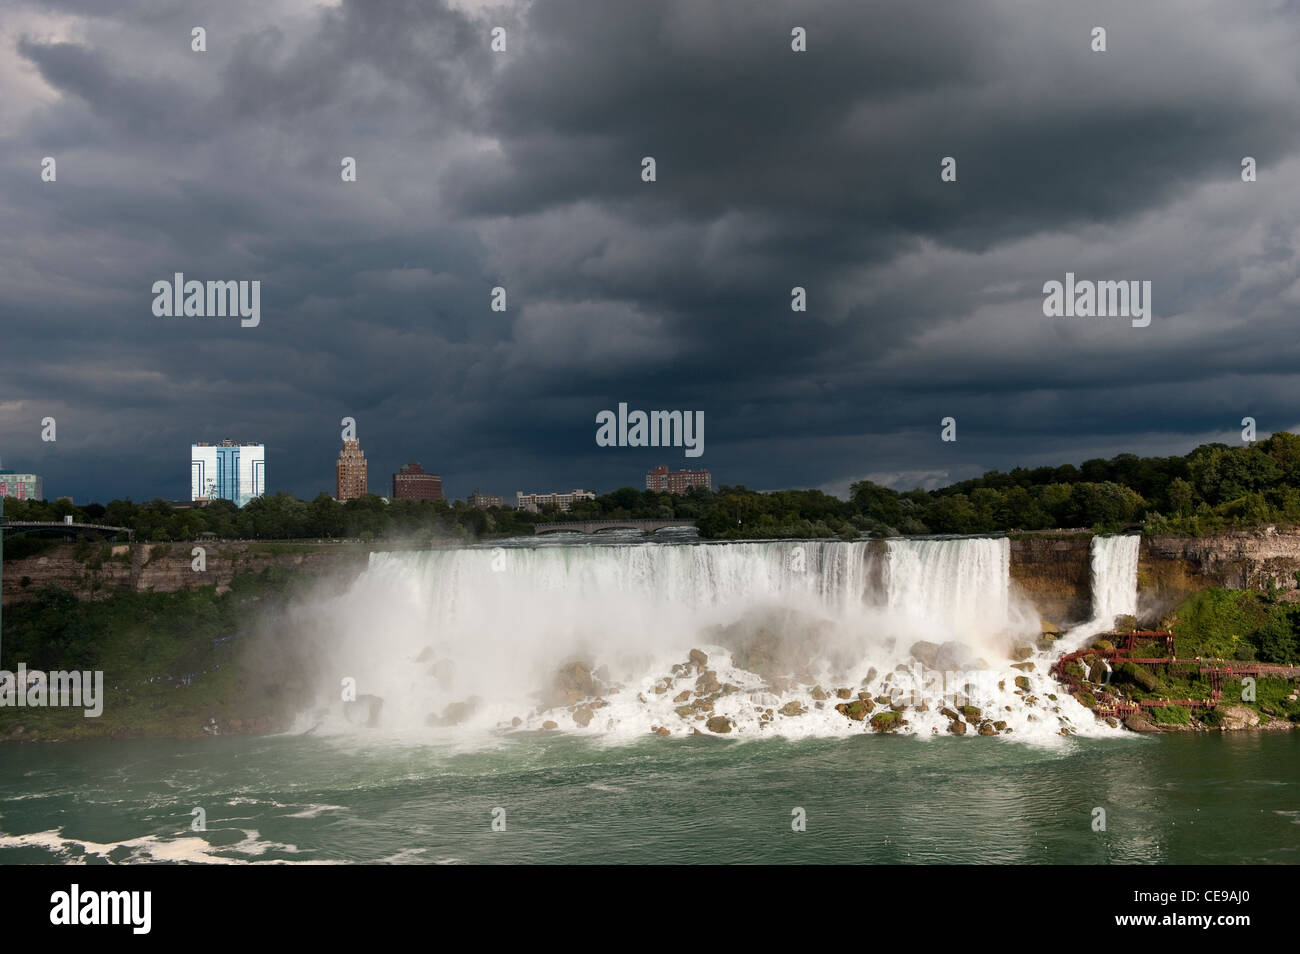 Stormy sky over the American Falls at Niagara falls. Stock Photo